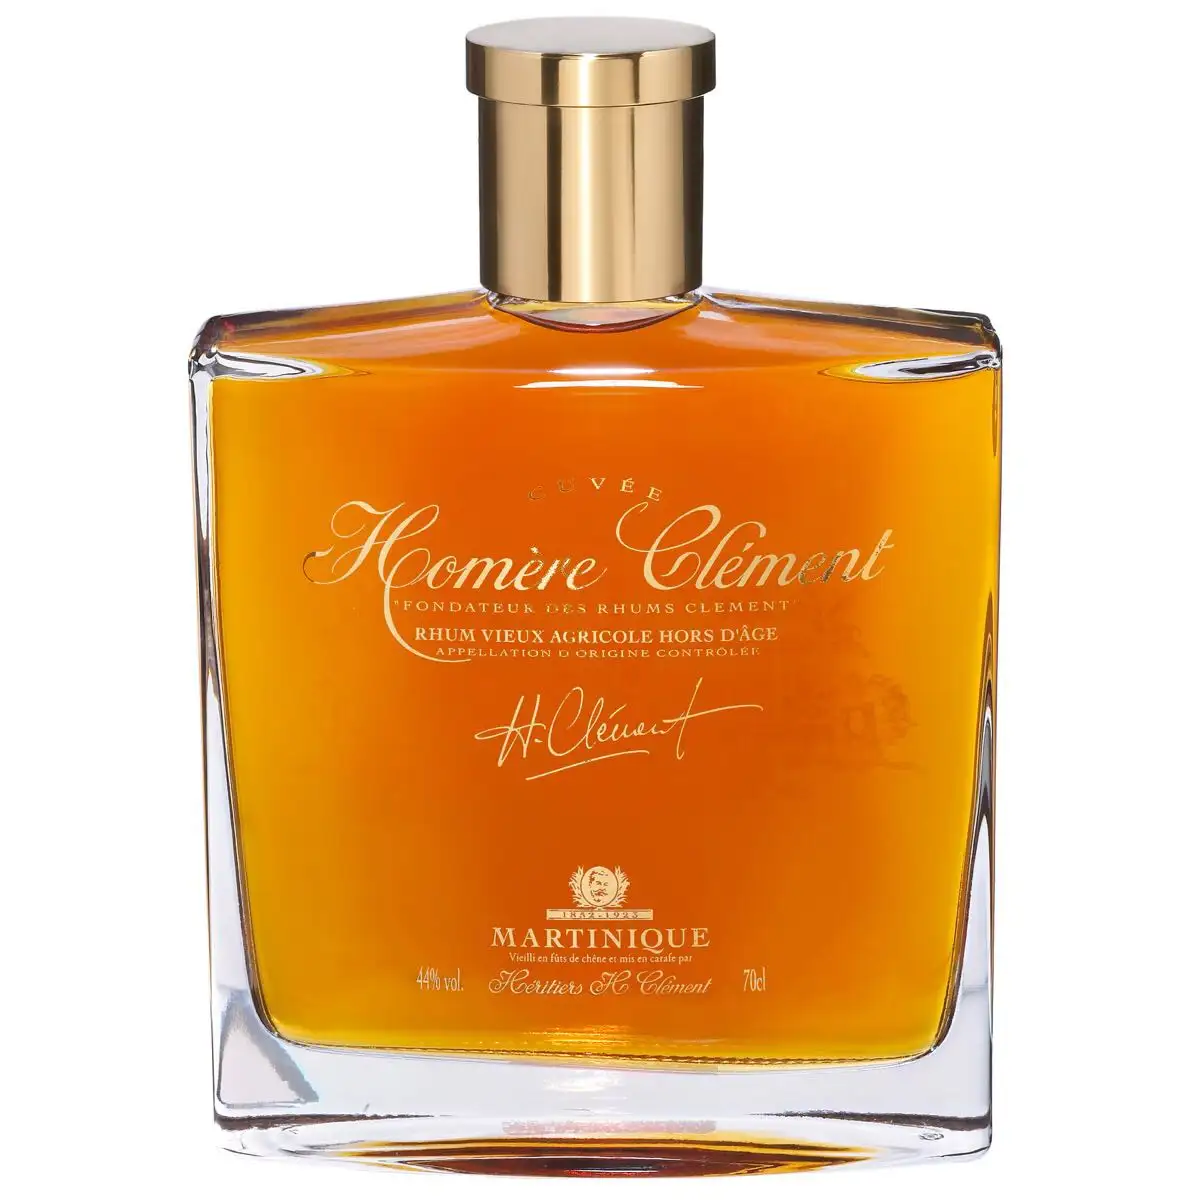 Image of the front of the bottle of the rum Clément Cuvée Homère Clément